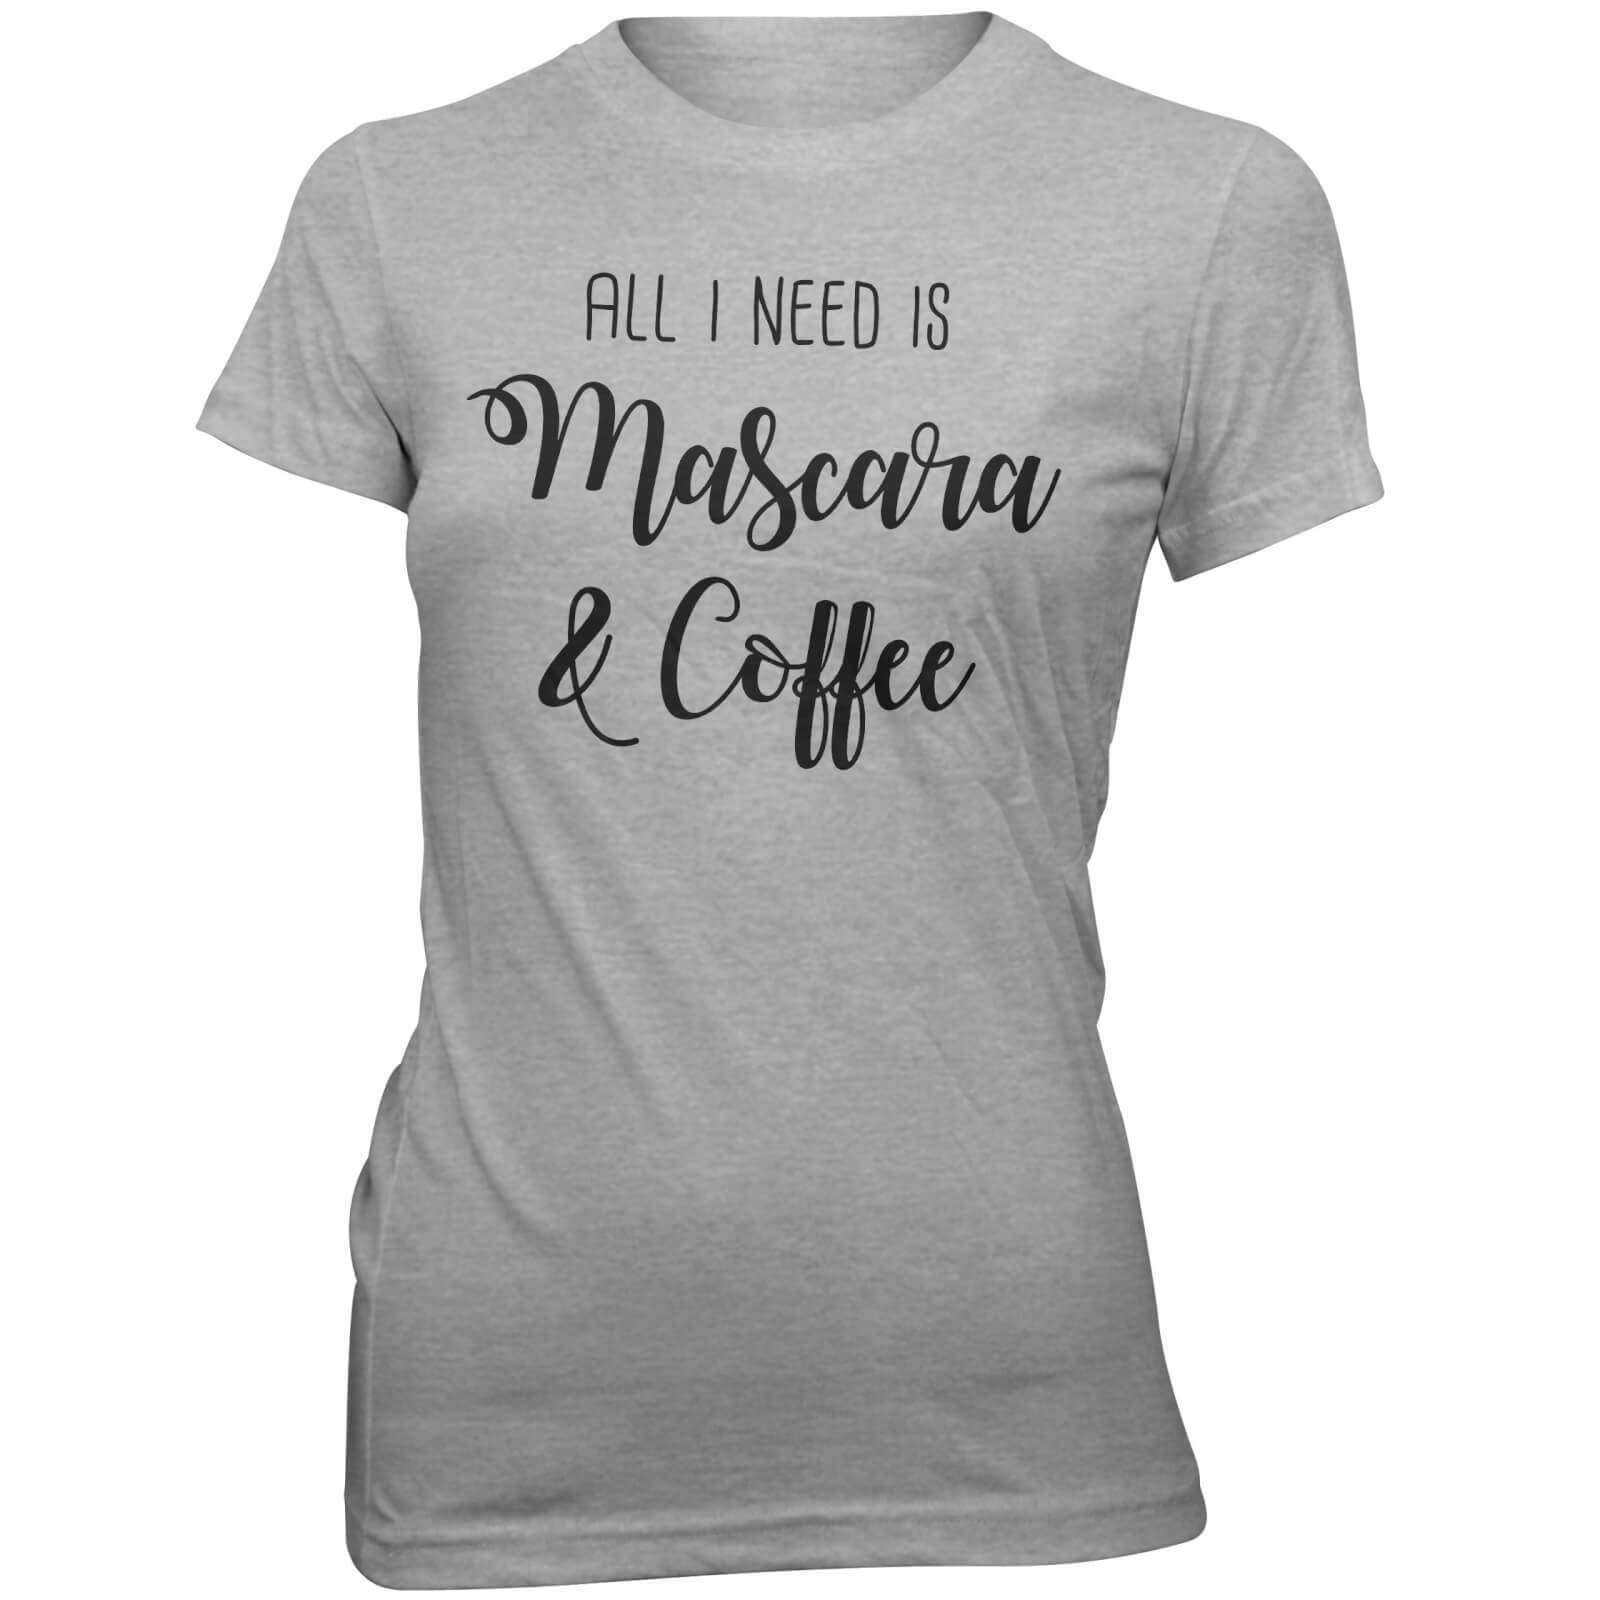 Mascara and Coffee Women's Slogan T-Shirt - S - Grey